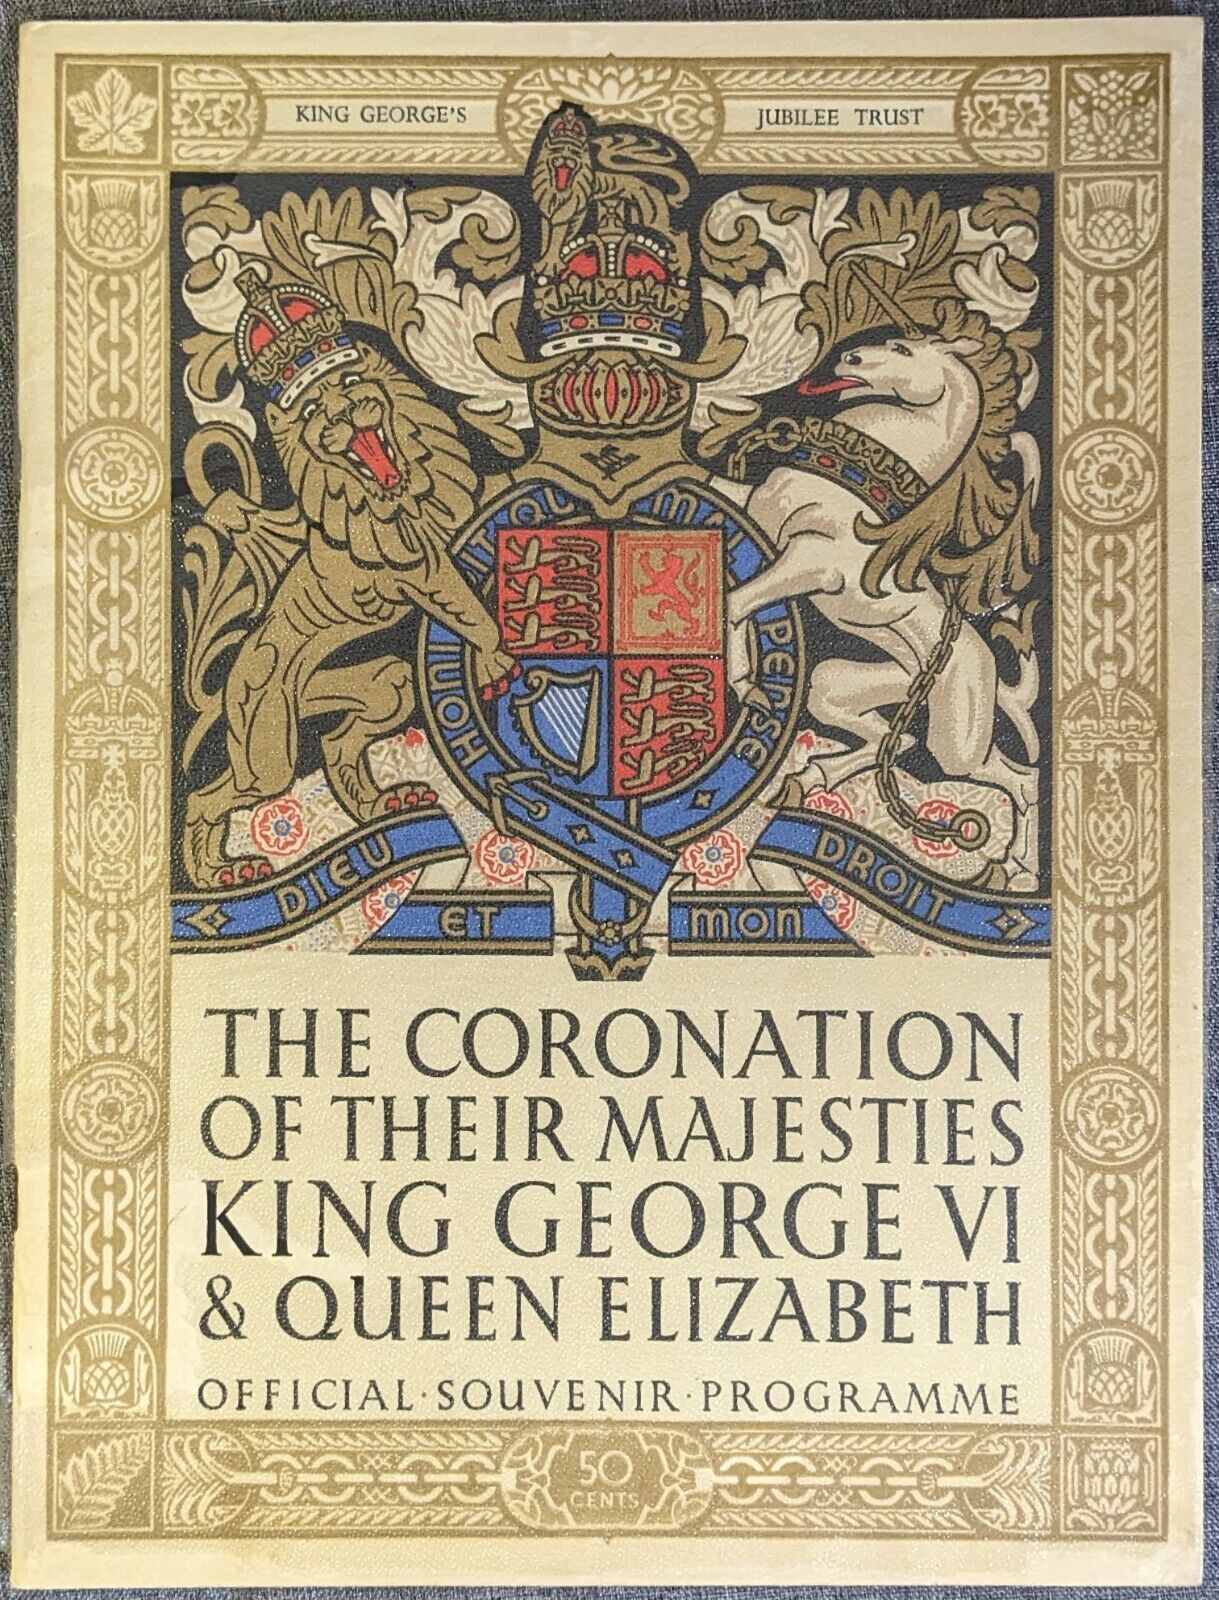 1937 King George VI & Queen Elizabeth Coronation Souvenir Program, USA EDITION